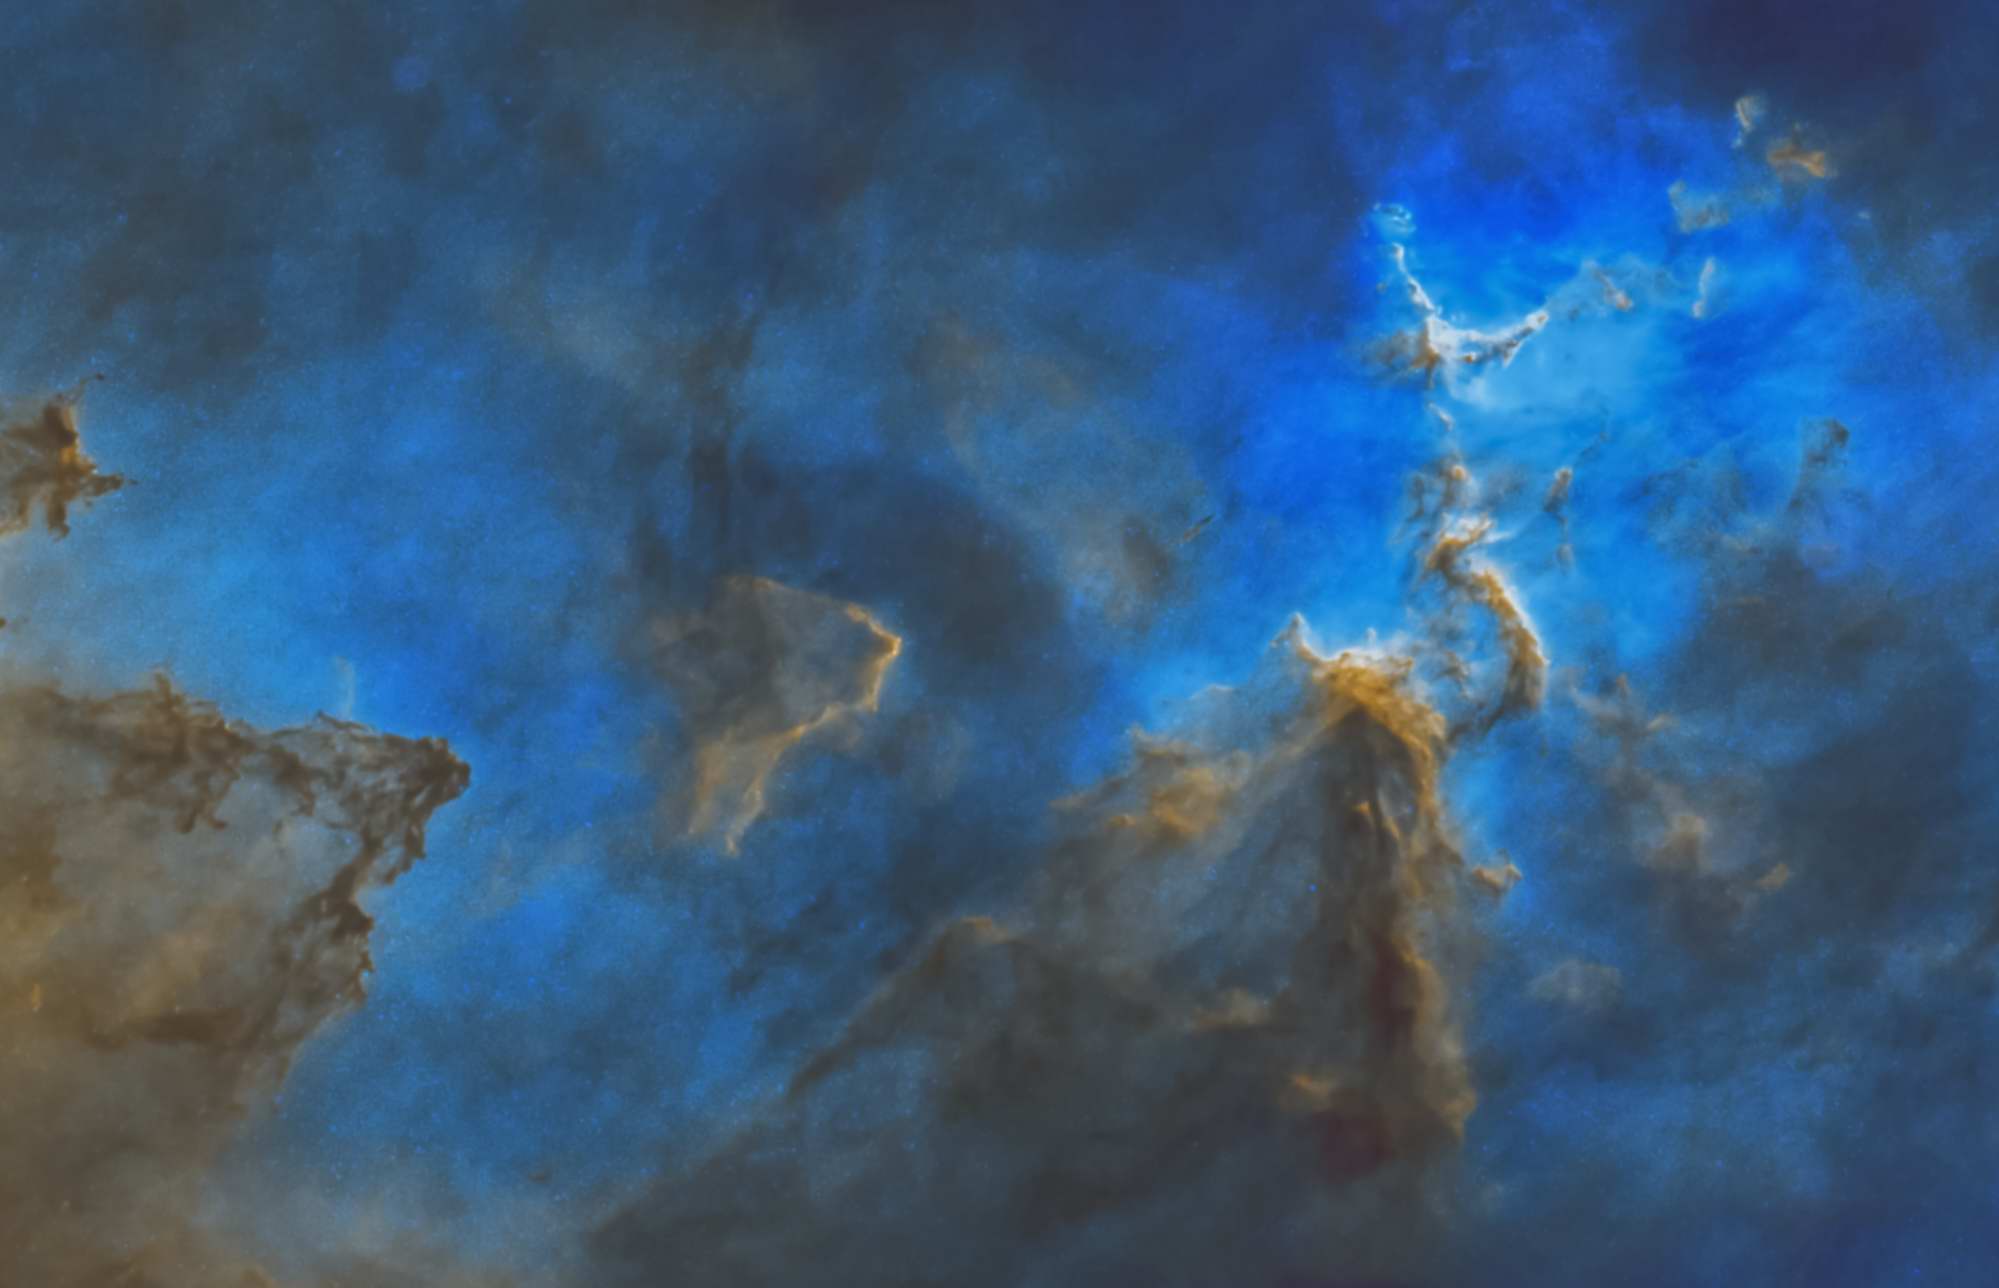 Melotte 15 / Heart Nebula Starless in SHO by William Gottemoller 